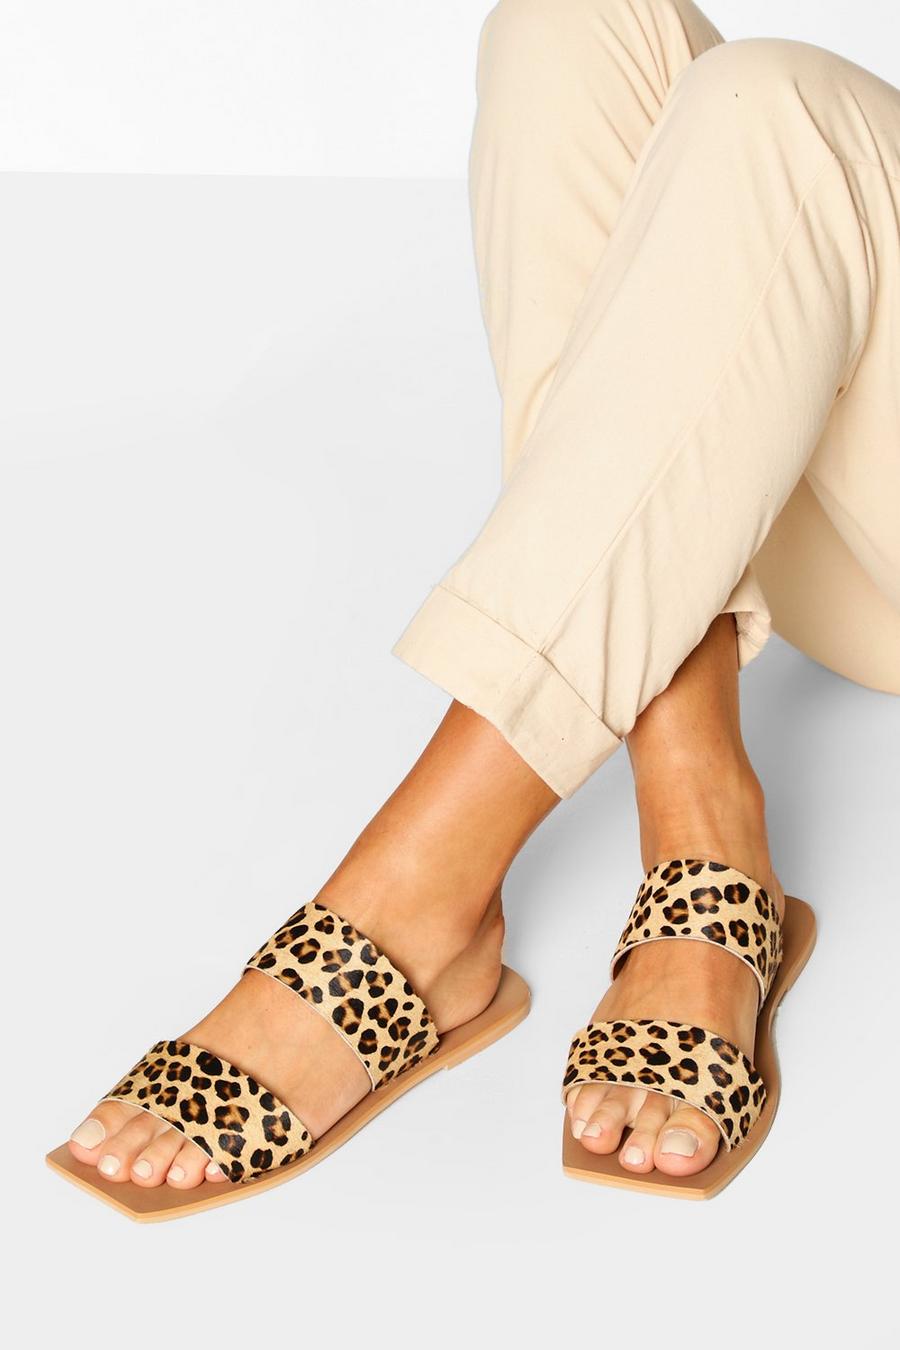 Sandalias holgadas de dedo cuadradas con tira doble de leopardo